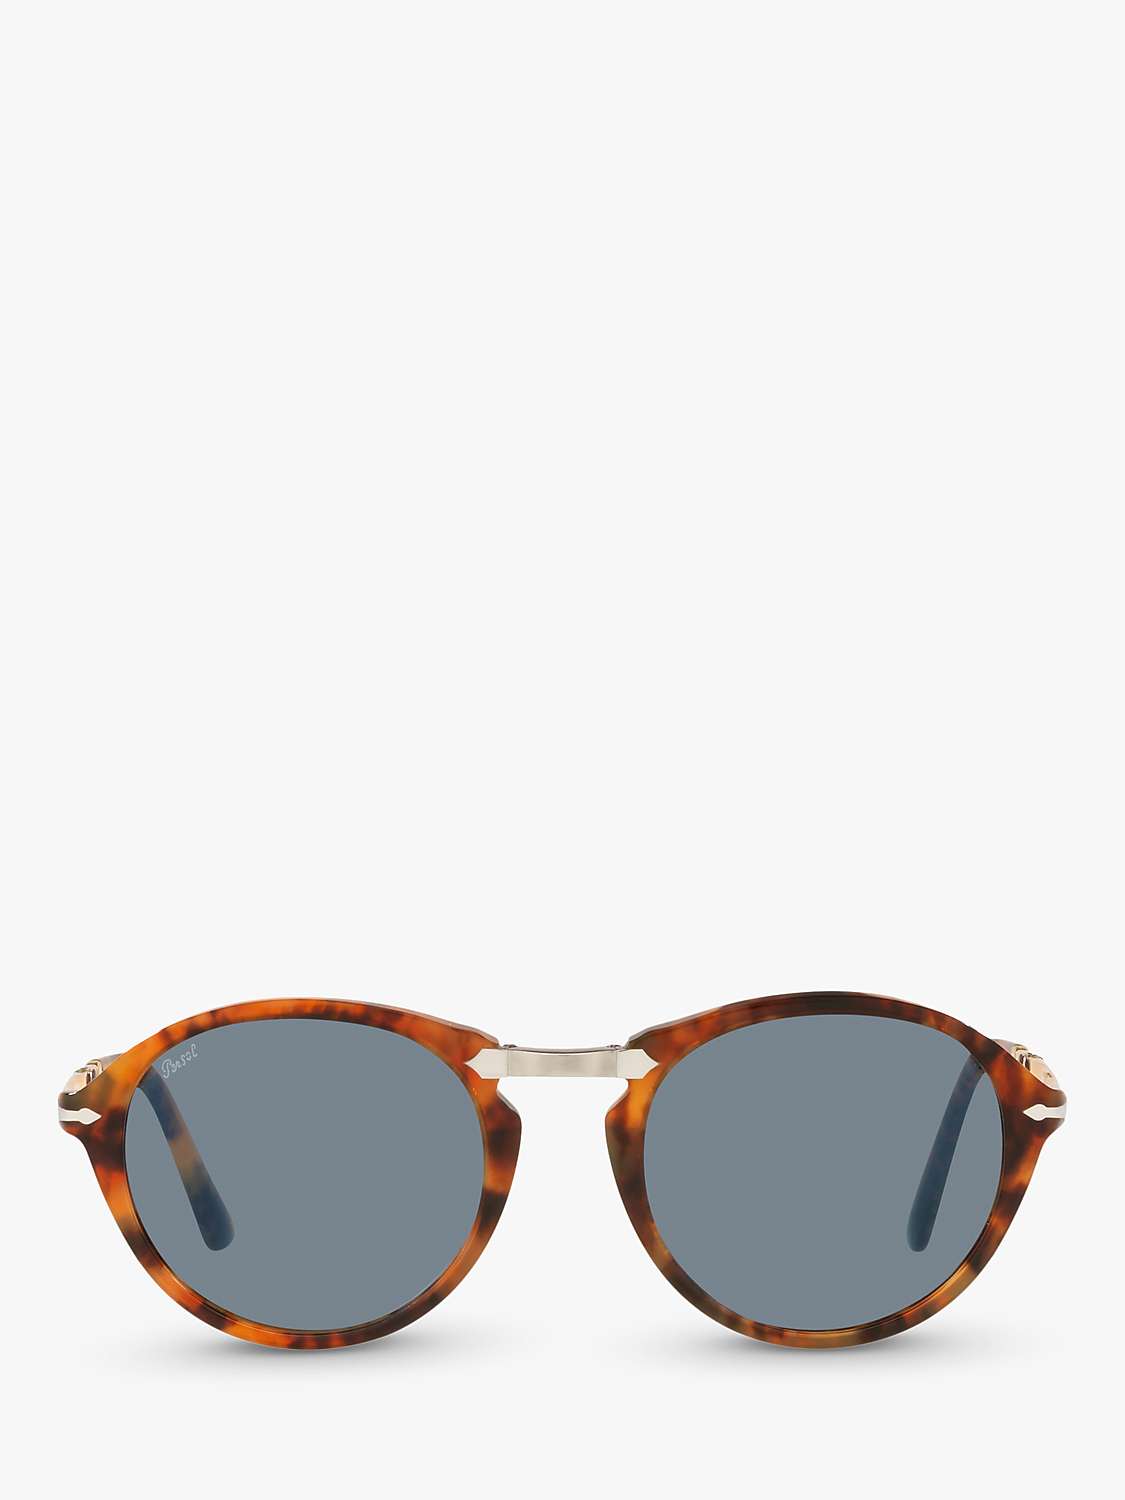 Buy Persol PO3274S Unisex Oval Sunglasses, Havana/Blue Online at johnlewis.com